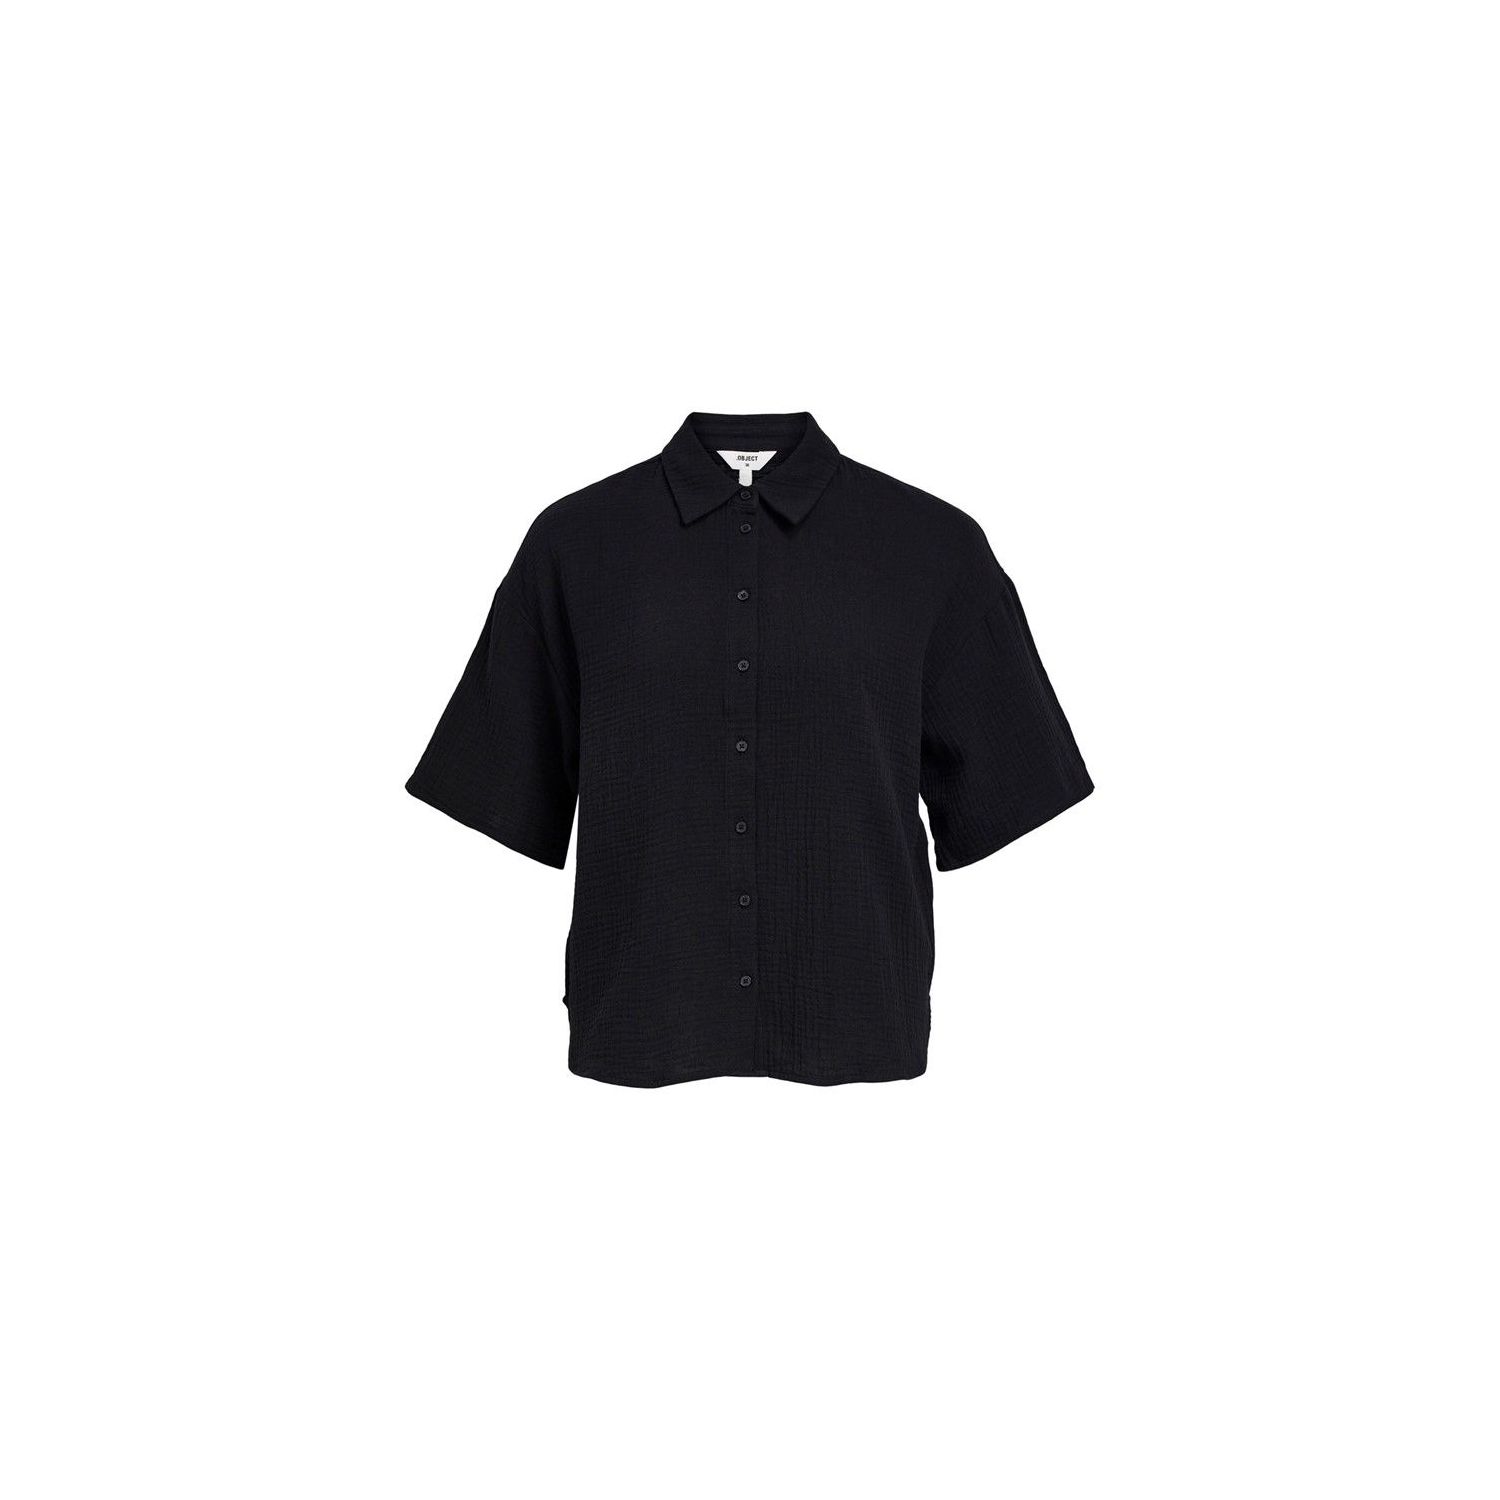 Object objcarina 2/4 shirt black